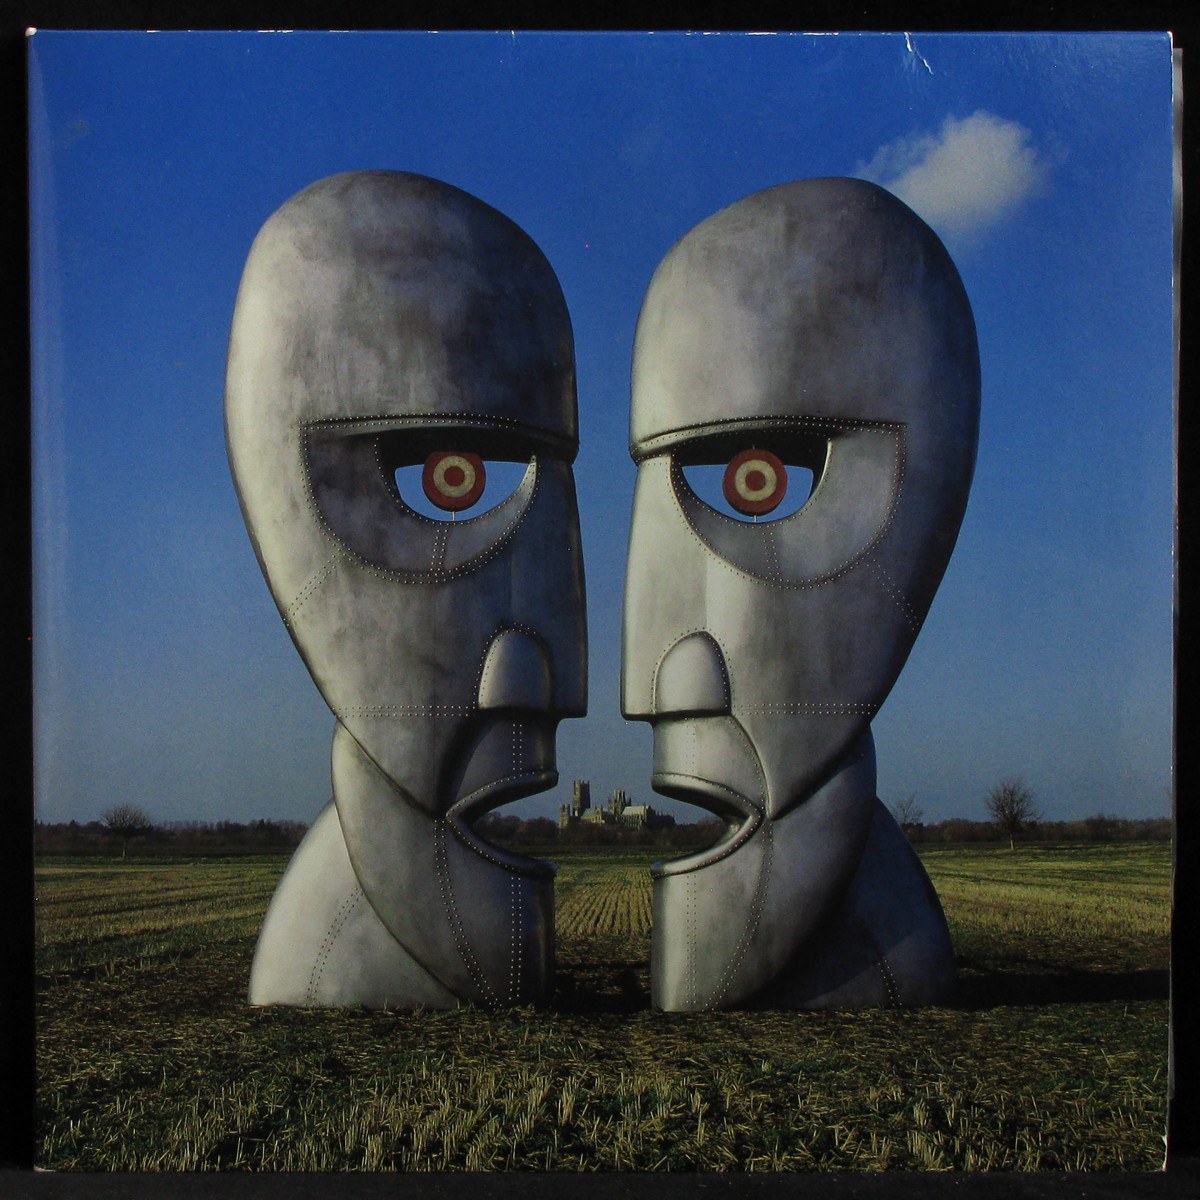 LP Pink Floyd — Division Bell (2LP) фото